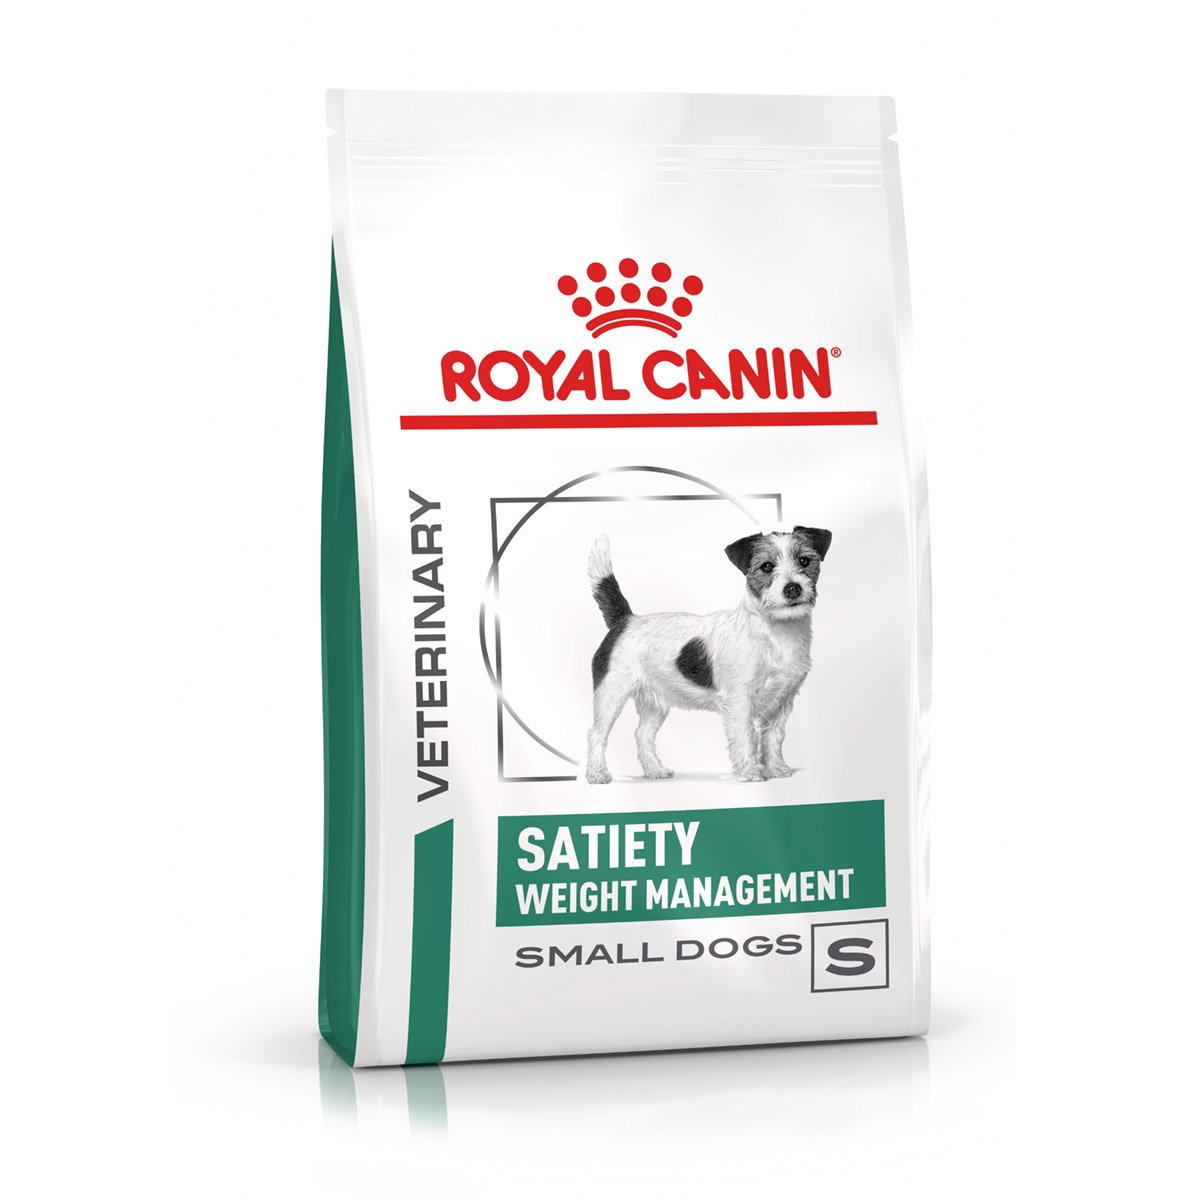 ROYAL CANIN® Veterinary SATIETY SMALL DOGS Trockenfutter für Hunde 1,5kg von Royal Canin